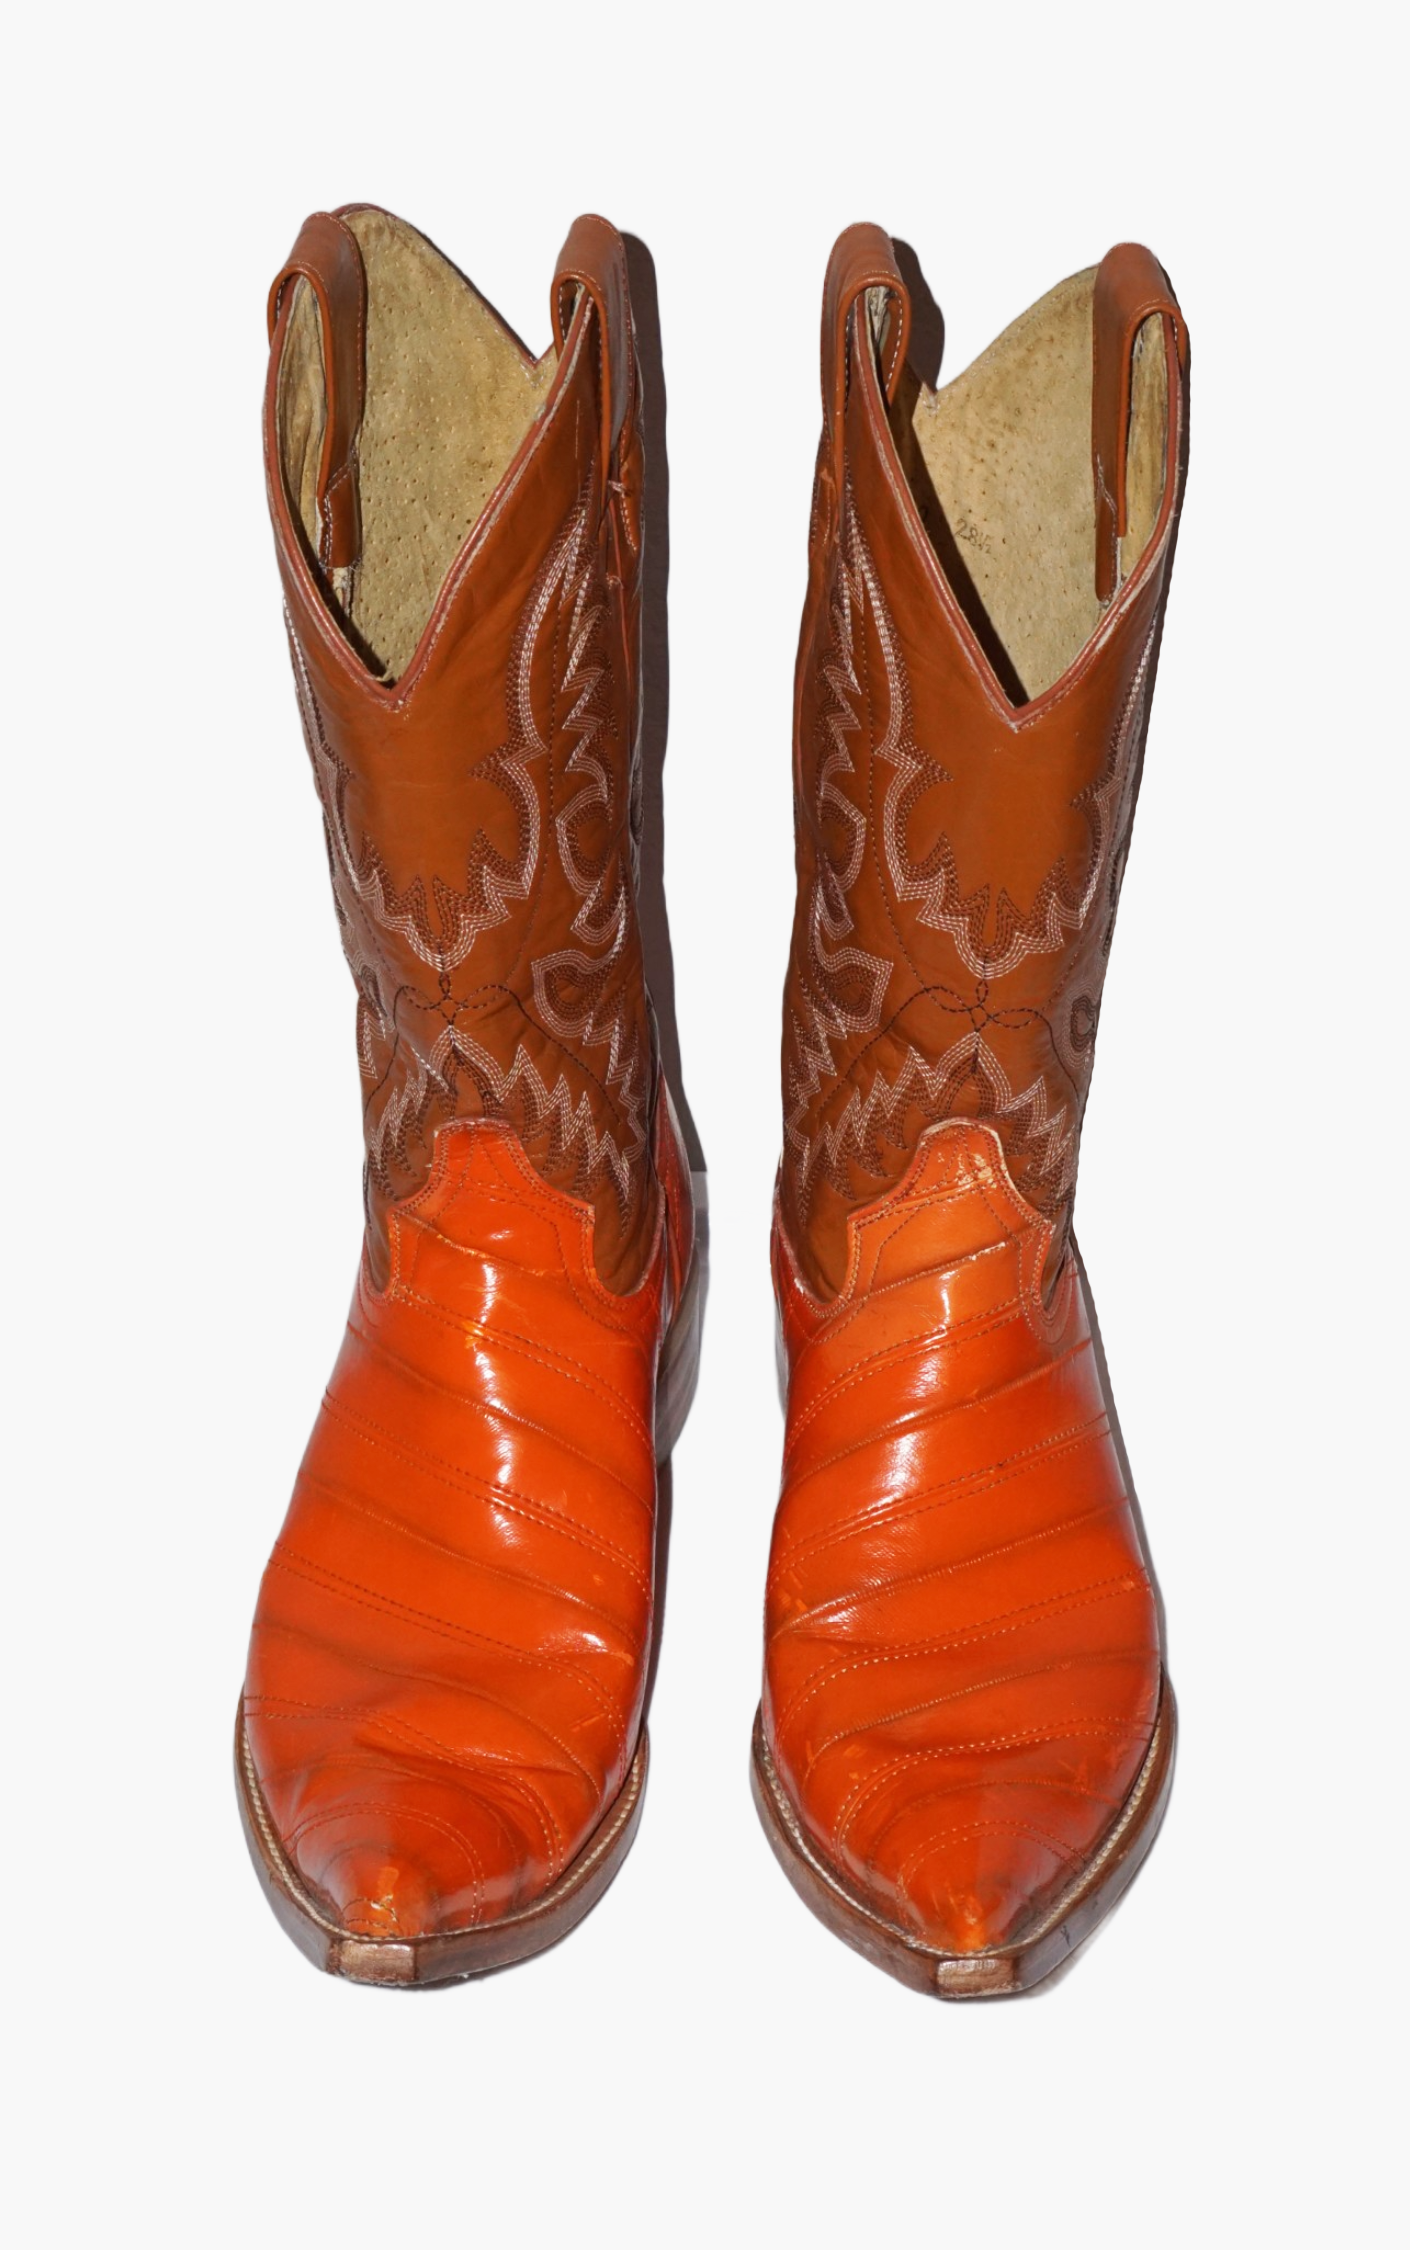 VINTAGE Orange Leather Western Cowboy Riding Boots resellum